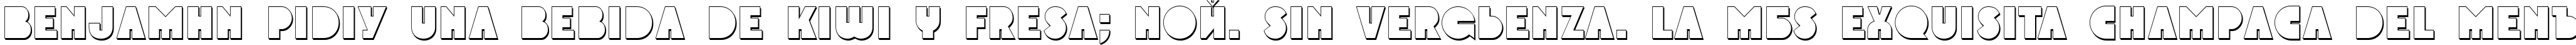 Пример написания шрифтом a_GrotoSh текста на испанском